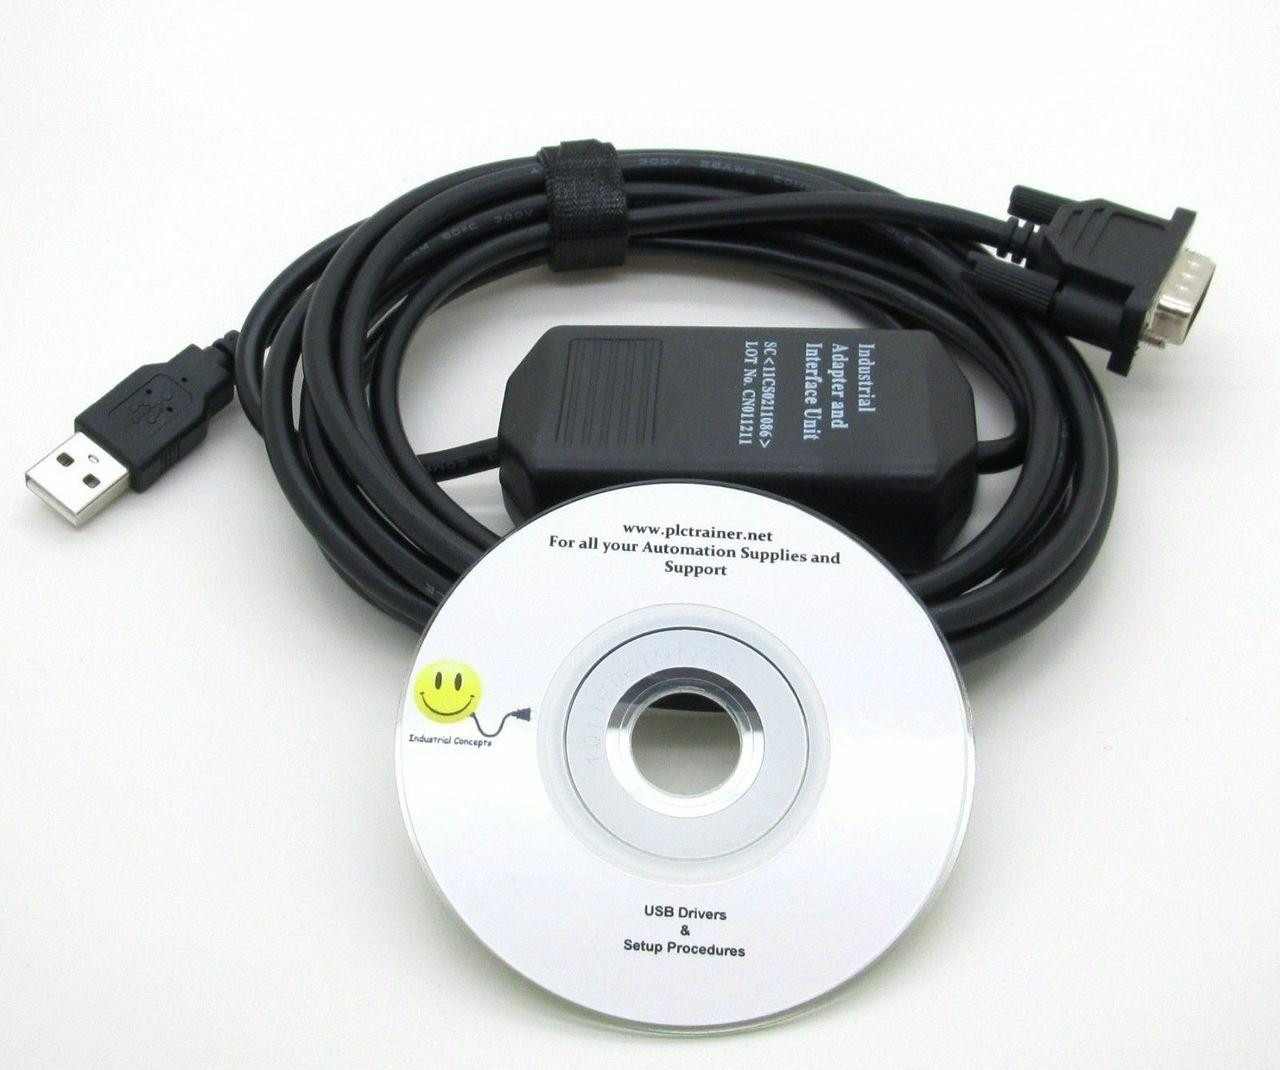 Siemens PLC USB/PPI programming cable - PLCCable.com - Automation Supplies and PLC Tools